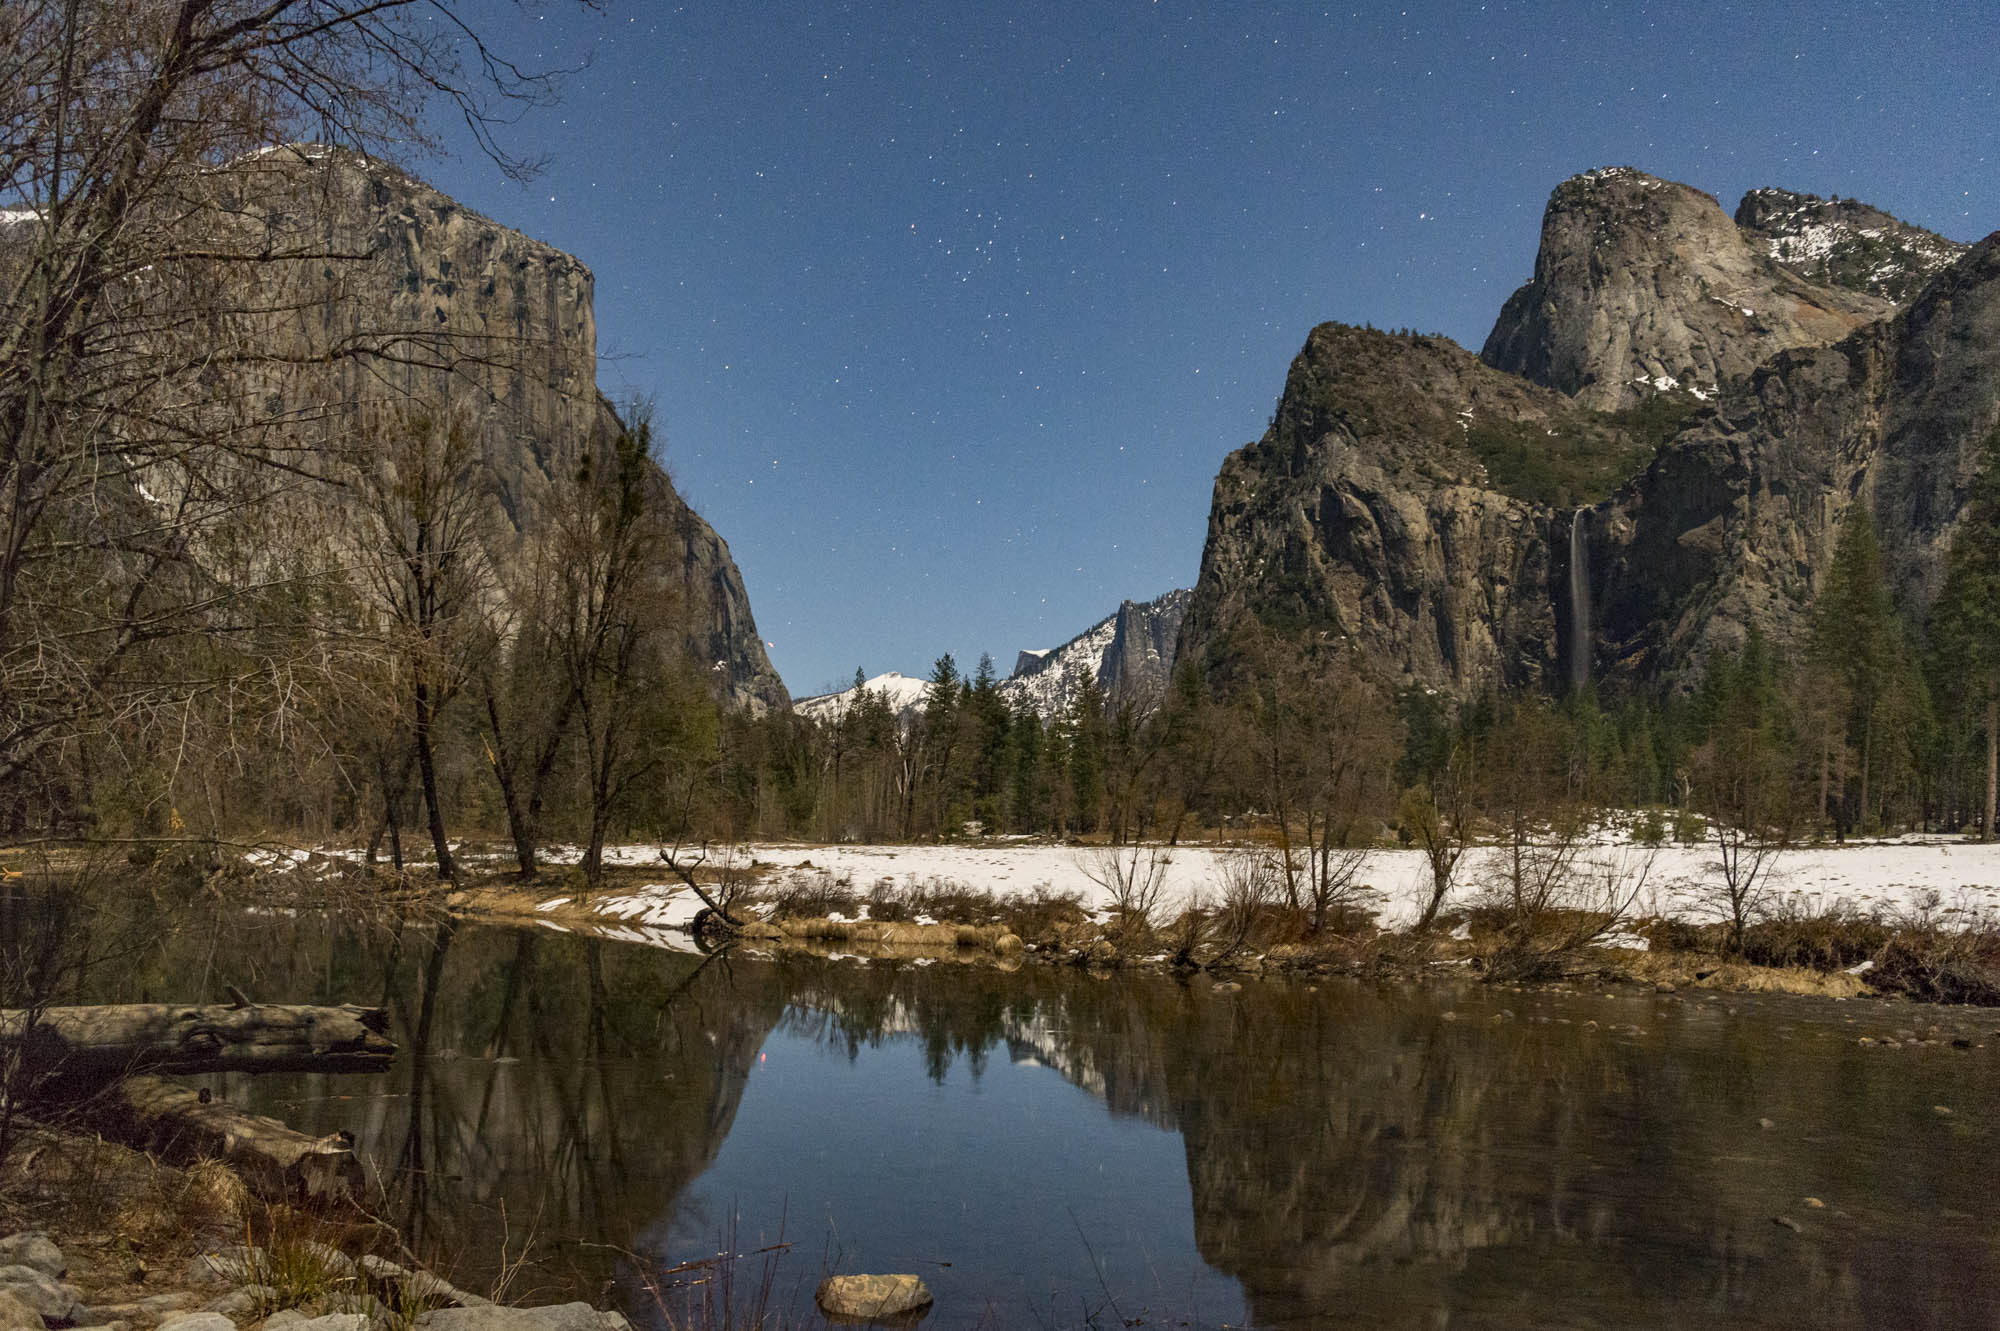 Yosemite Valley View at Night